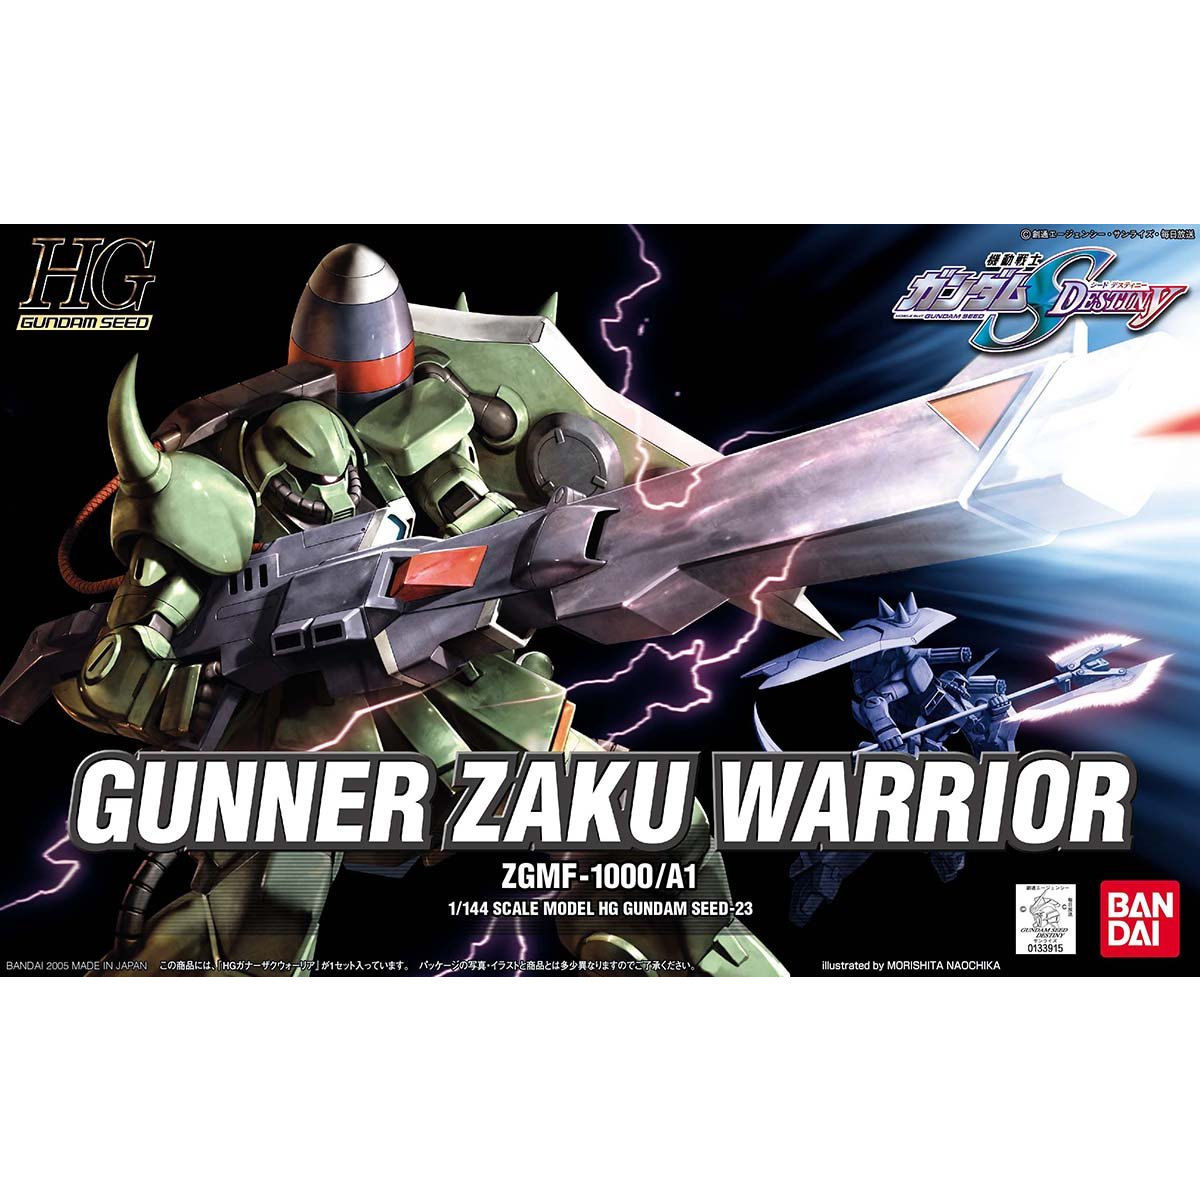 HGGS 1/144 No.23 ZGMF-1000/A1 Gunner Zaku Warrior